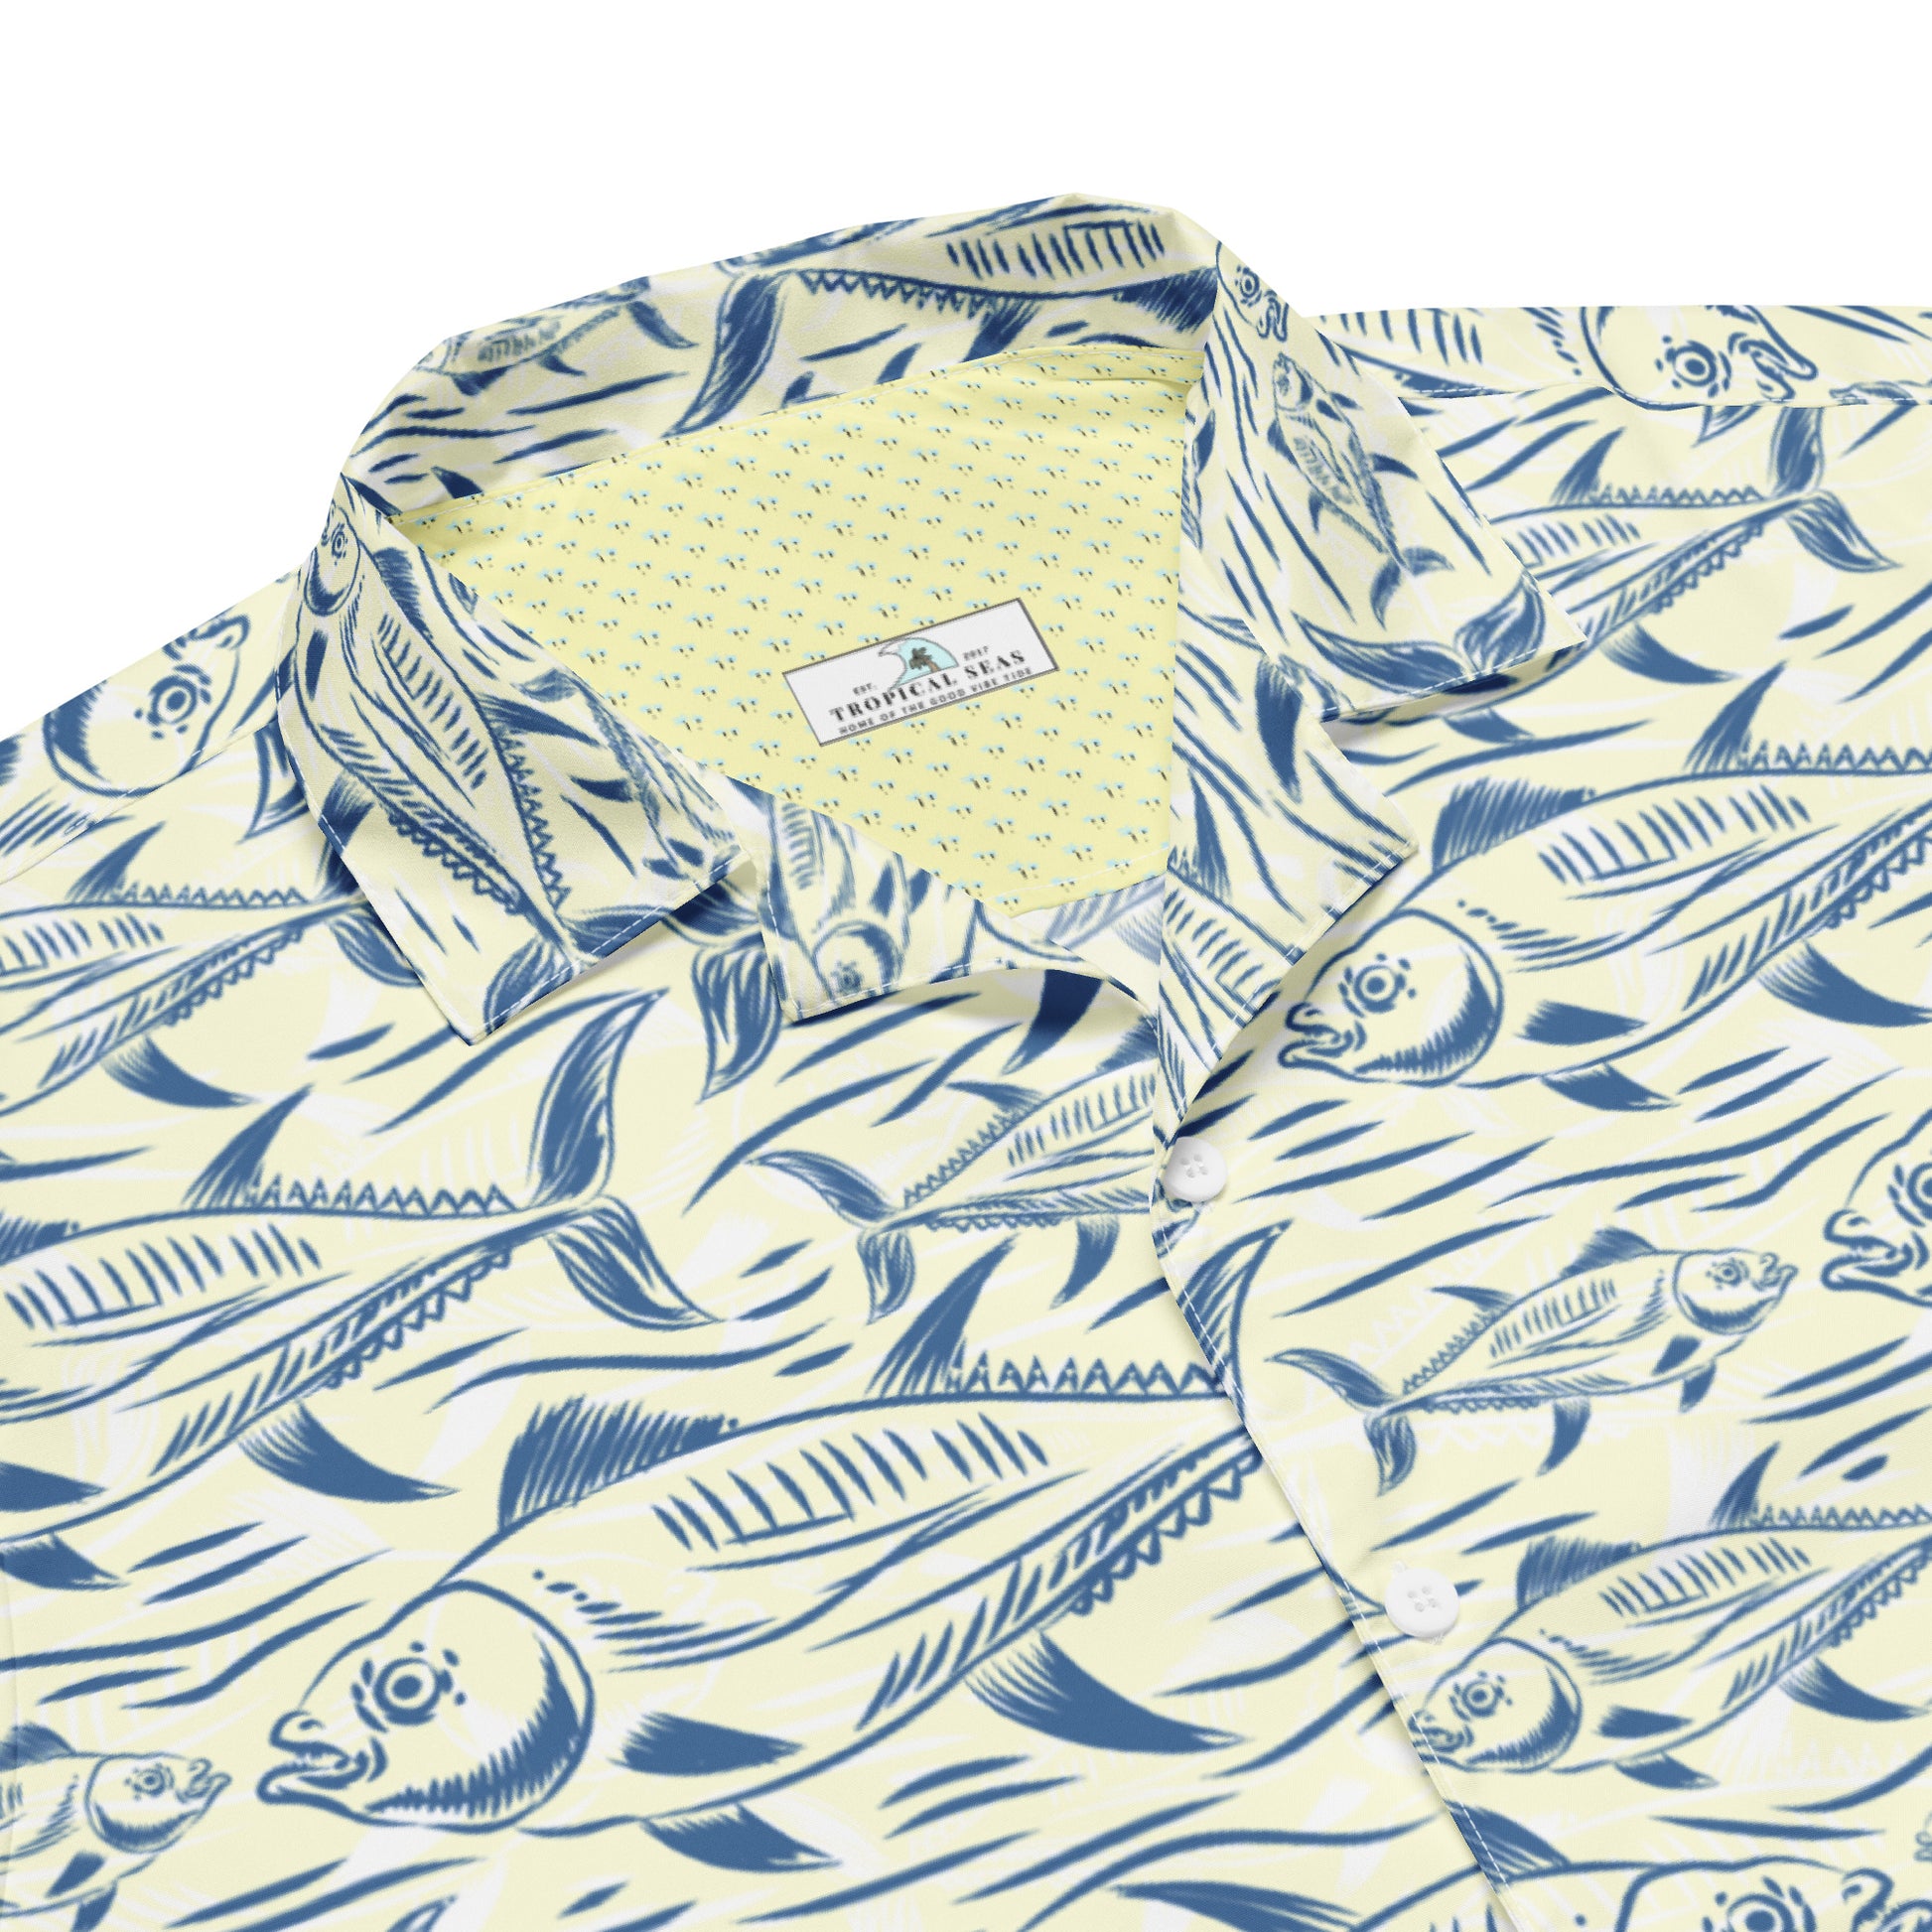 Bonito Island button shirt - Tropical Seas Clothing 